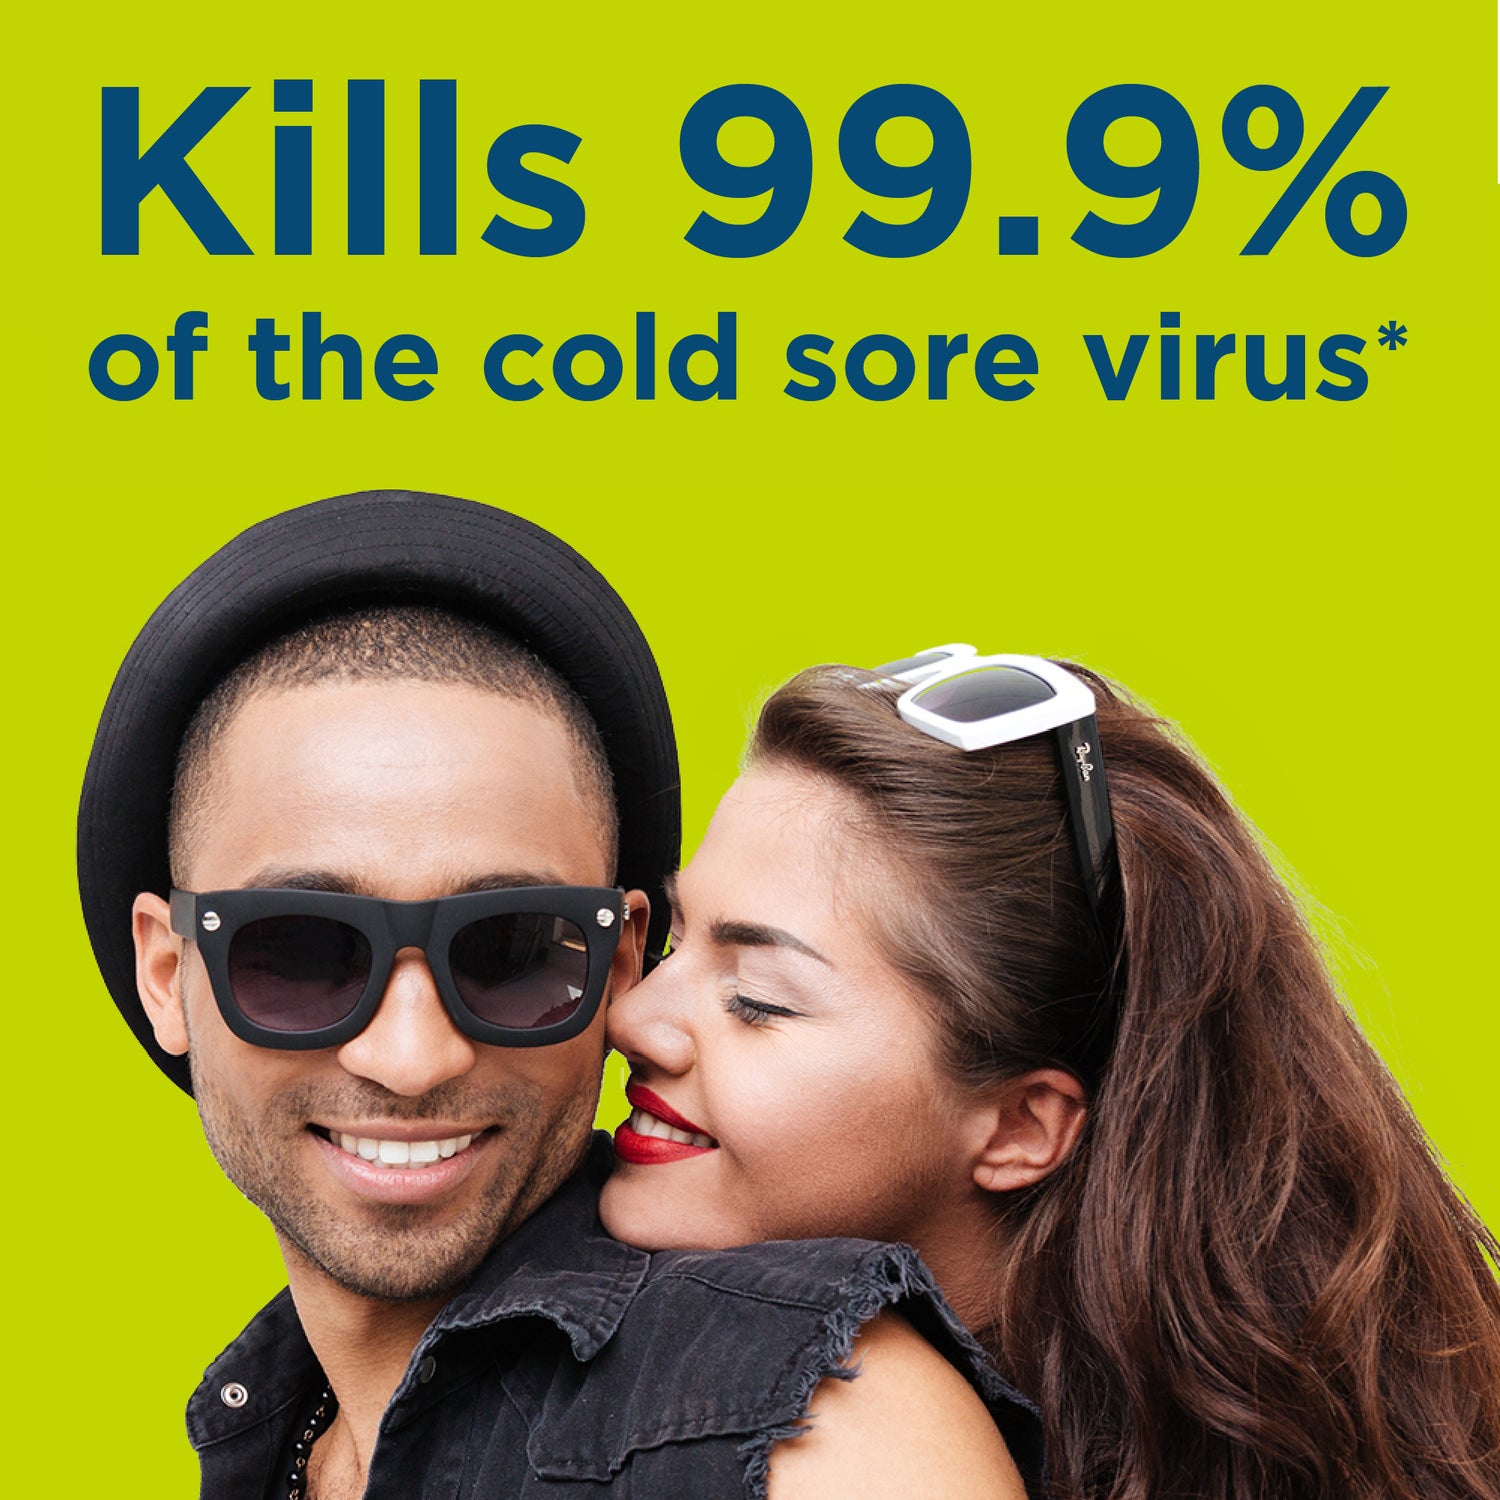 Curoxen kills 99.9% of the cold sore virus